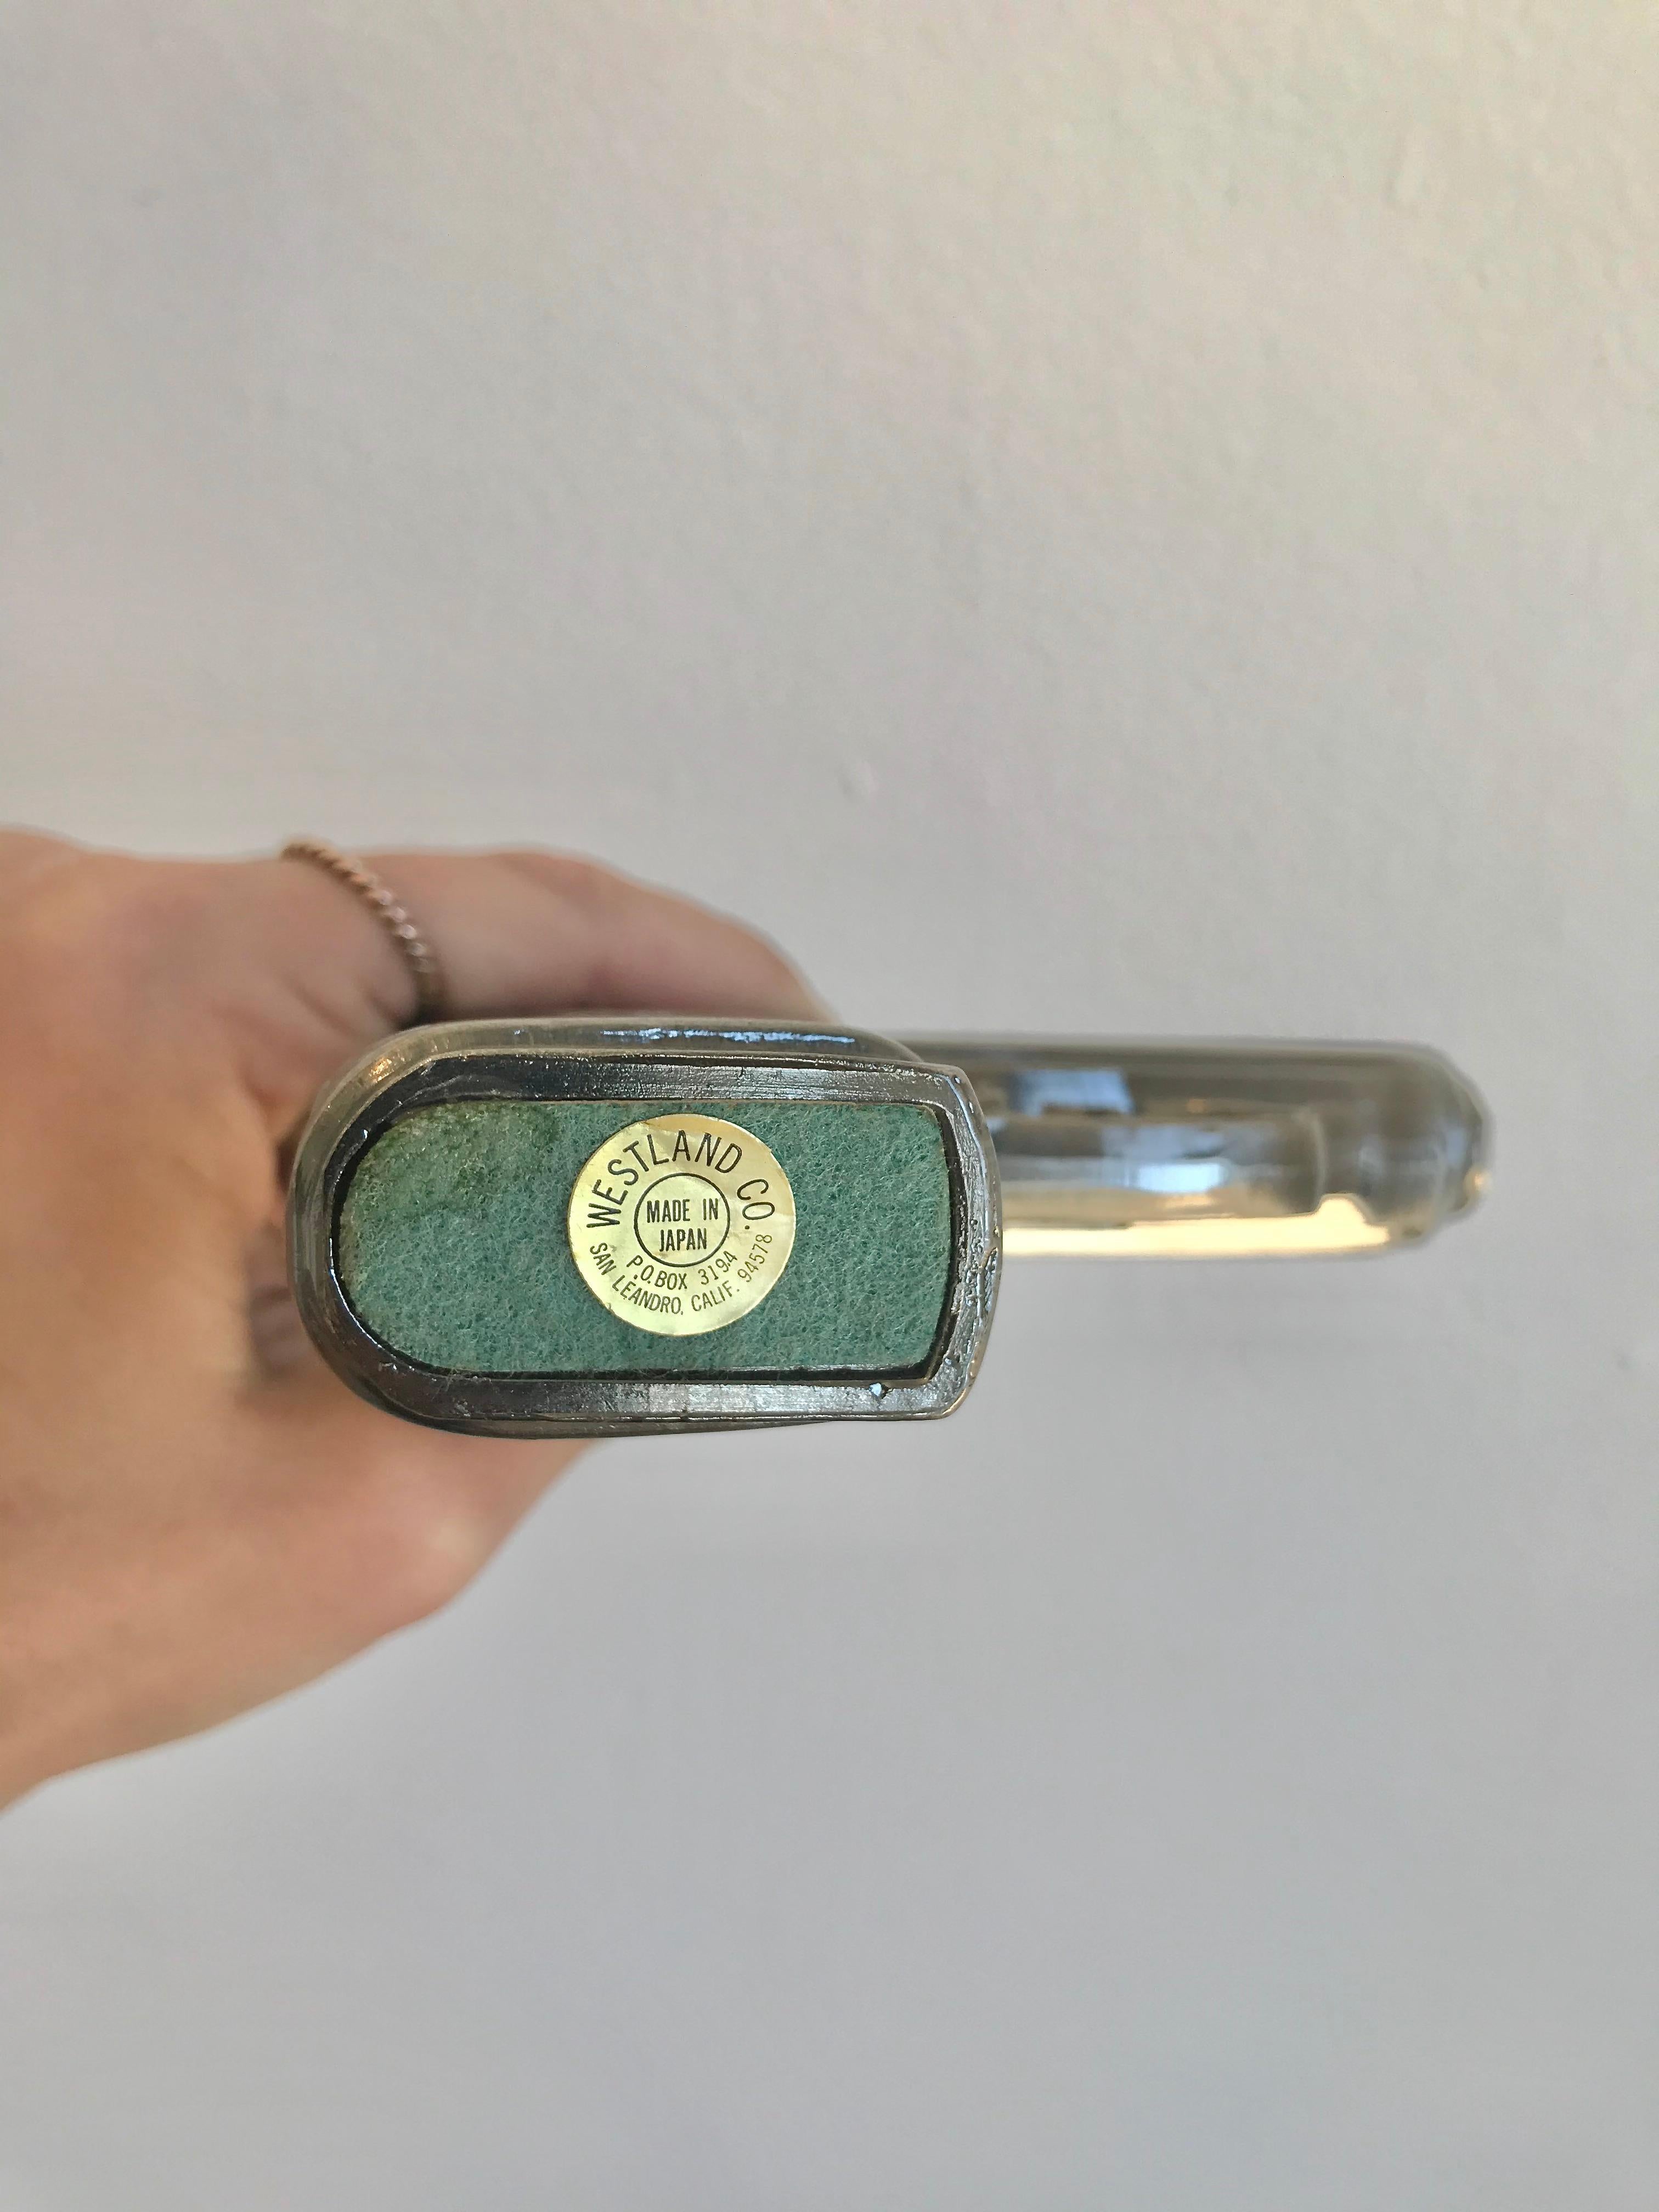 Vintage Walther-PPK Handgun Lighter 1